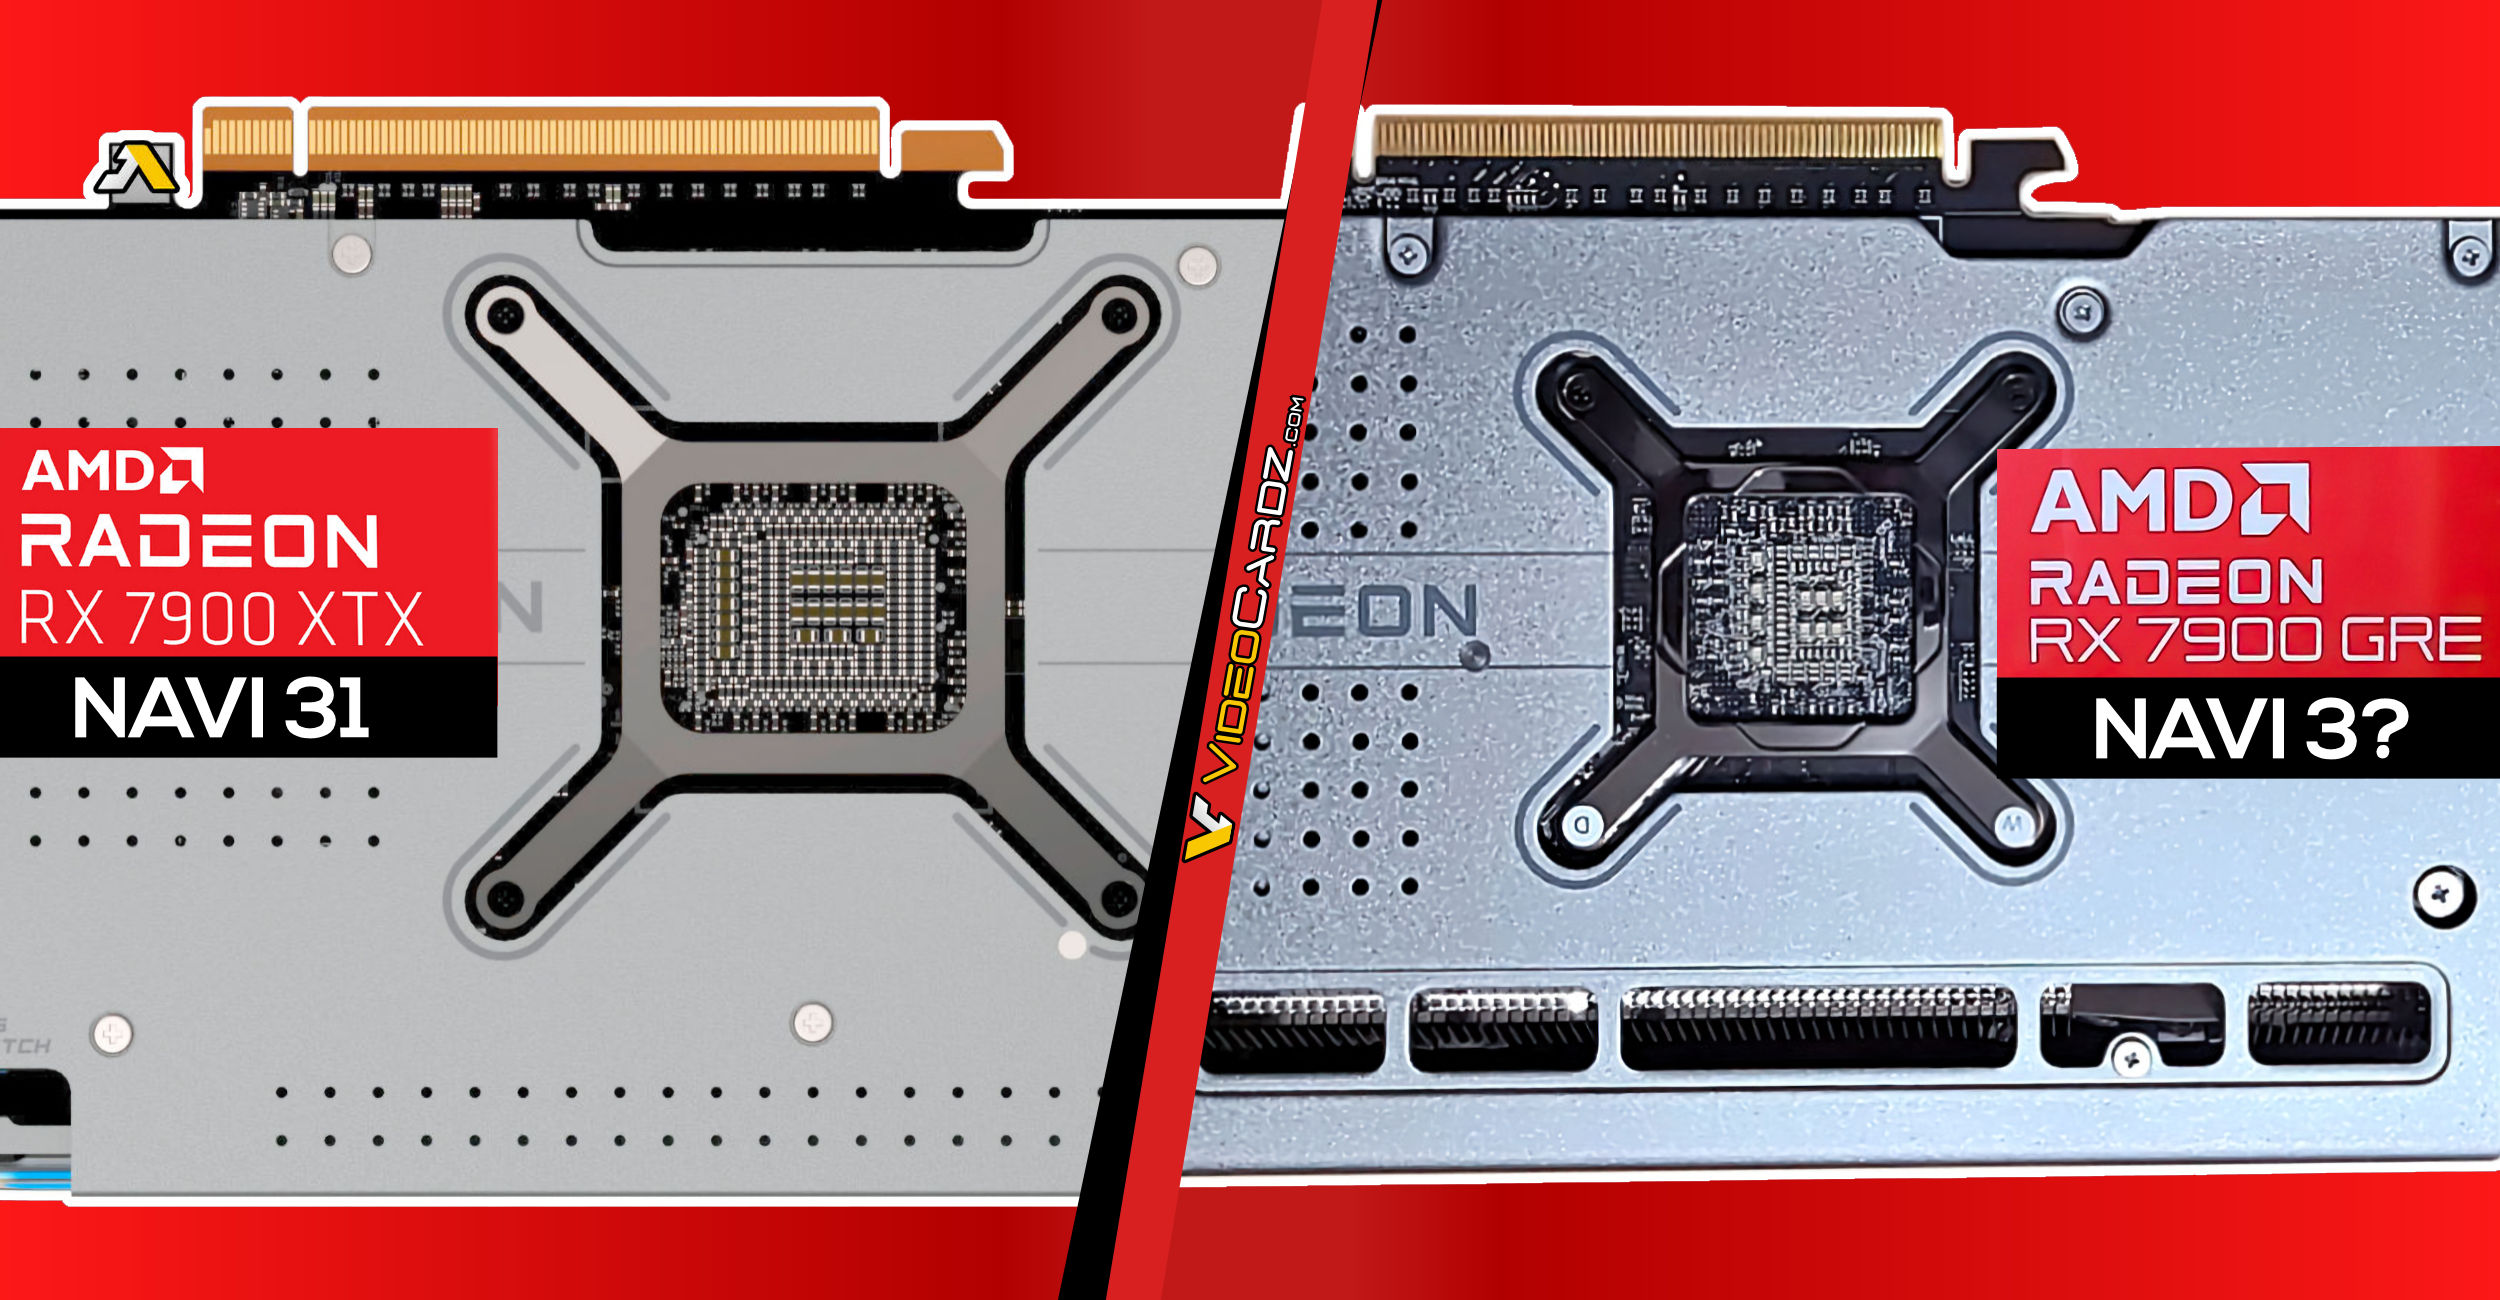 AMD Radeon RX 7900 GRE 16GB 7월 28일 출시, Navi 3X GPU 탑재 가능